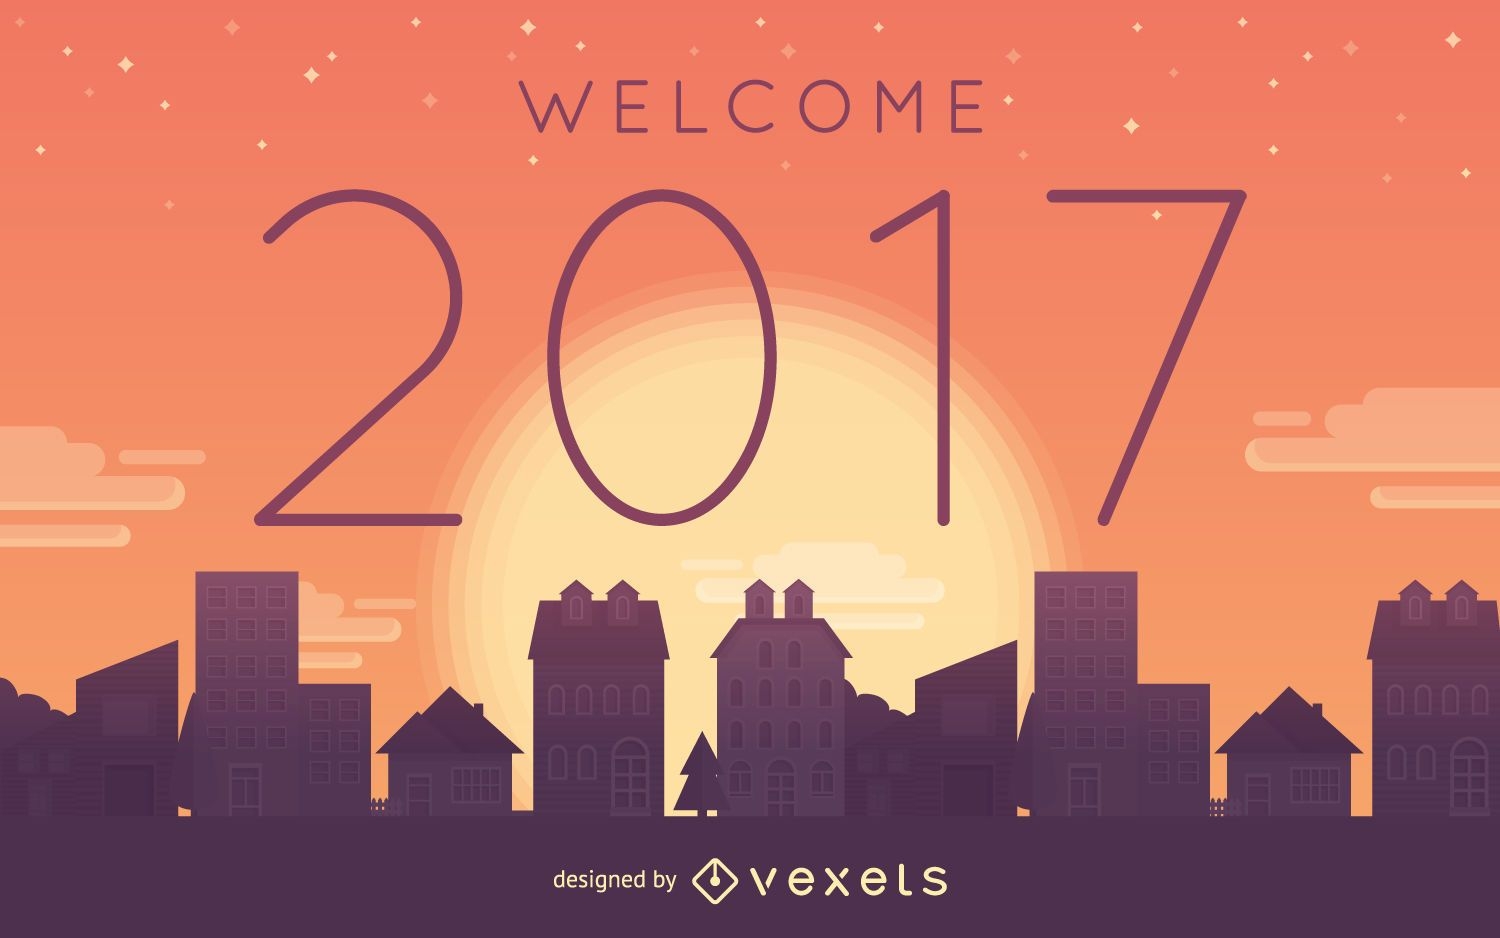 Welcome 2017 sunset city illustration